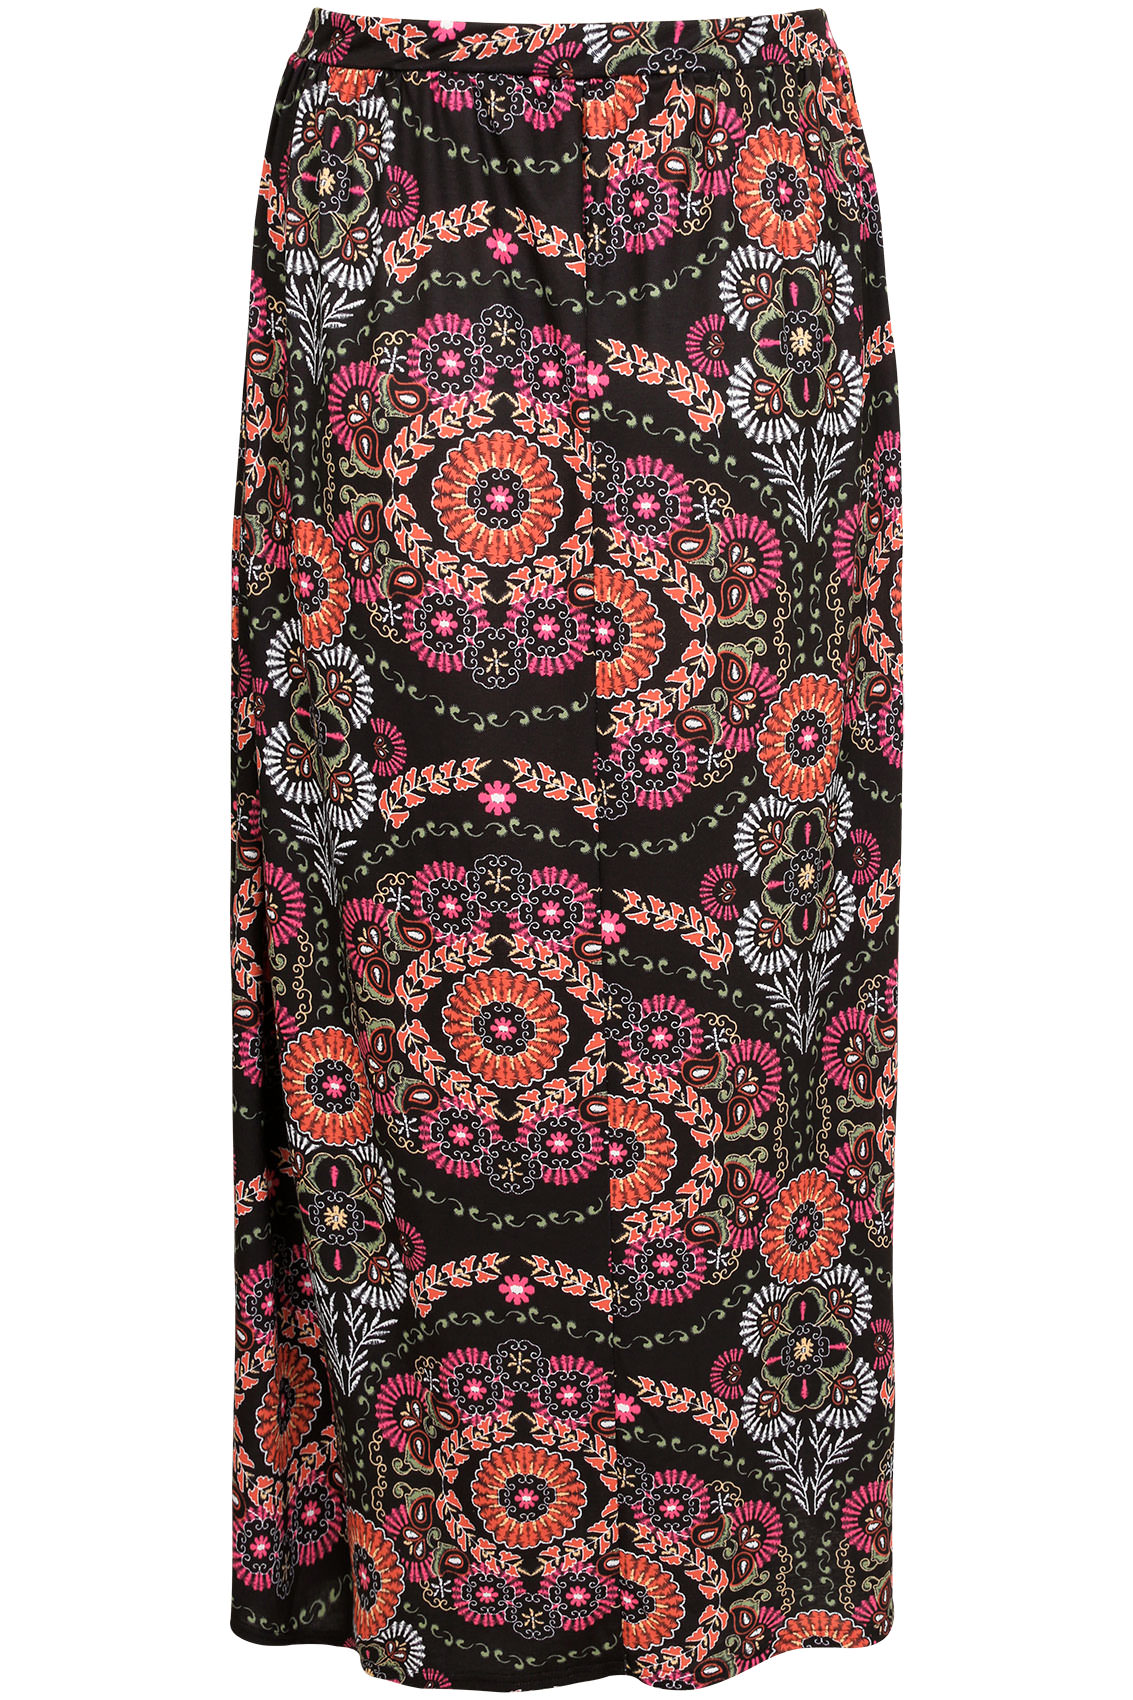 Black & Multi Circle Gypsy Print Jersey Maxi Skirt Plus size 16 to 36